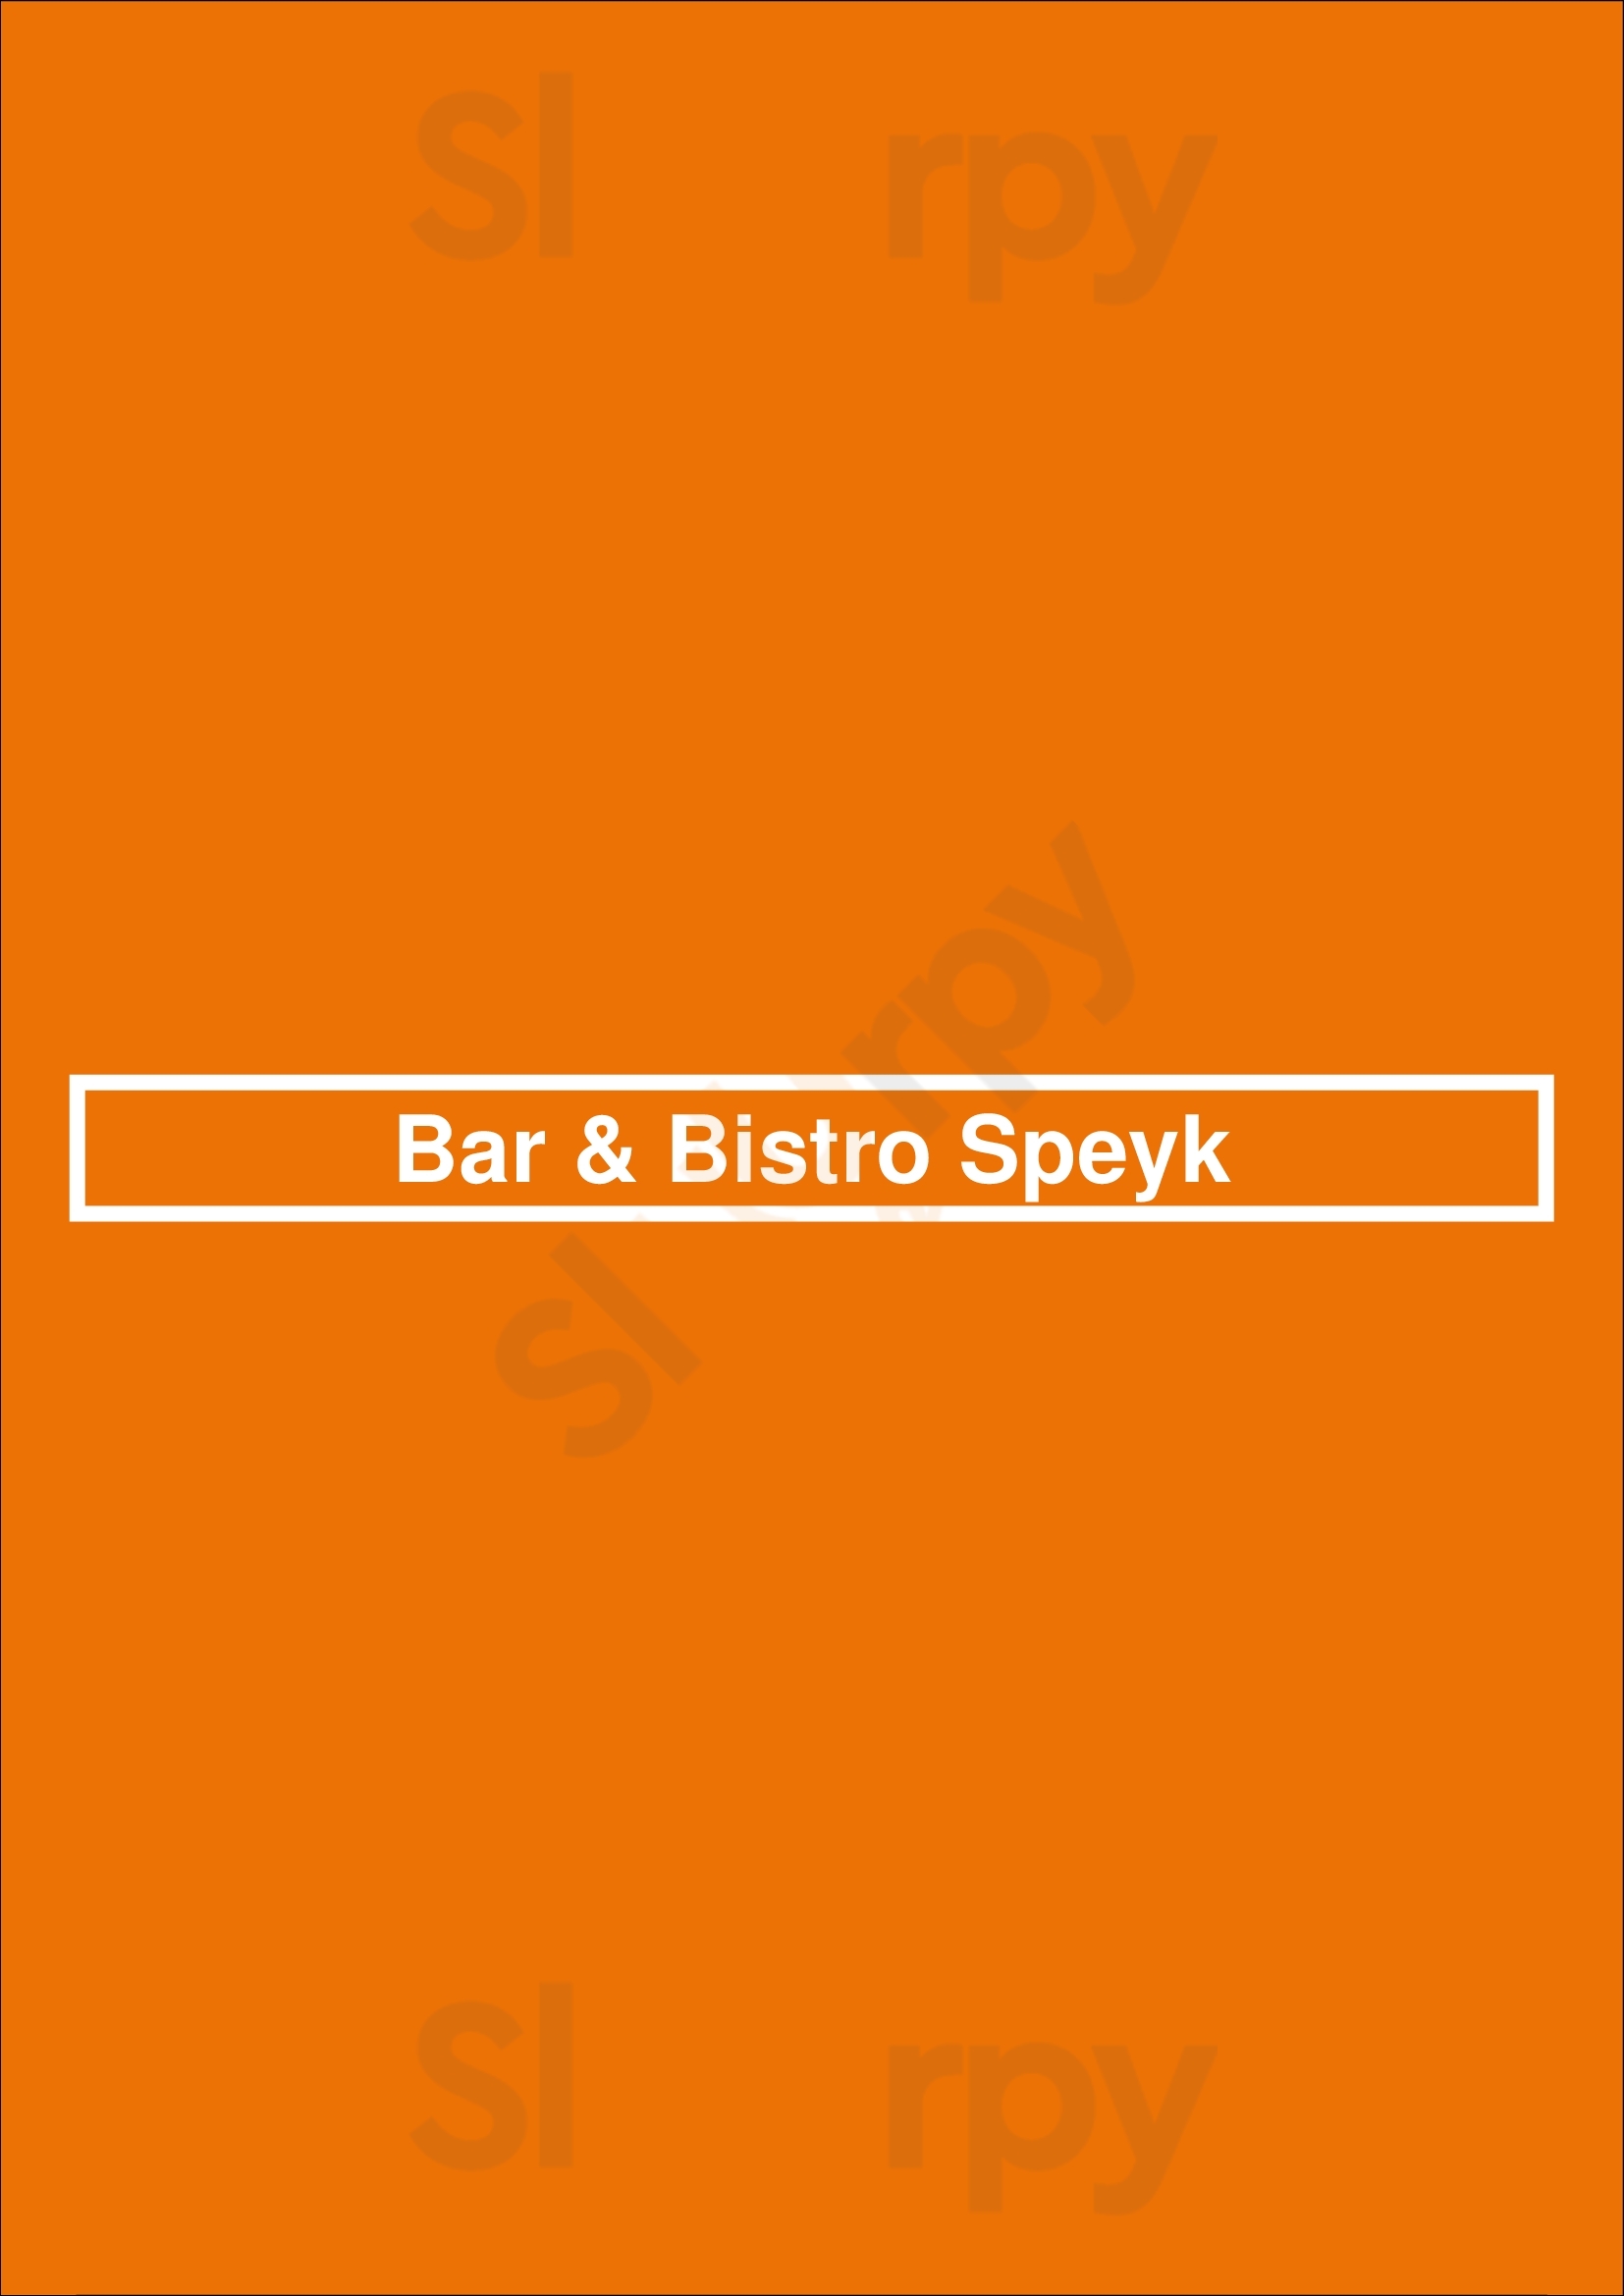 Bar & Bistro Speyk Vlissingen Menu - 1